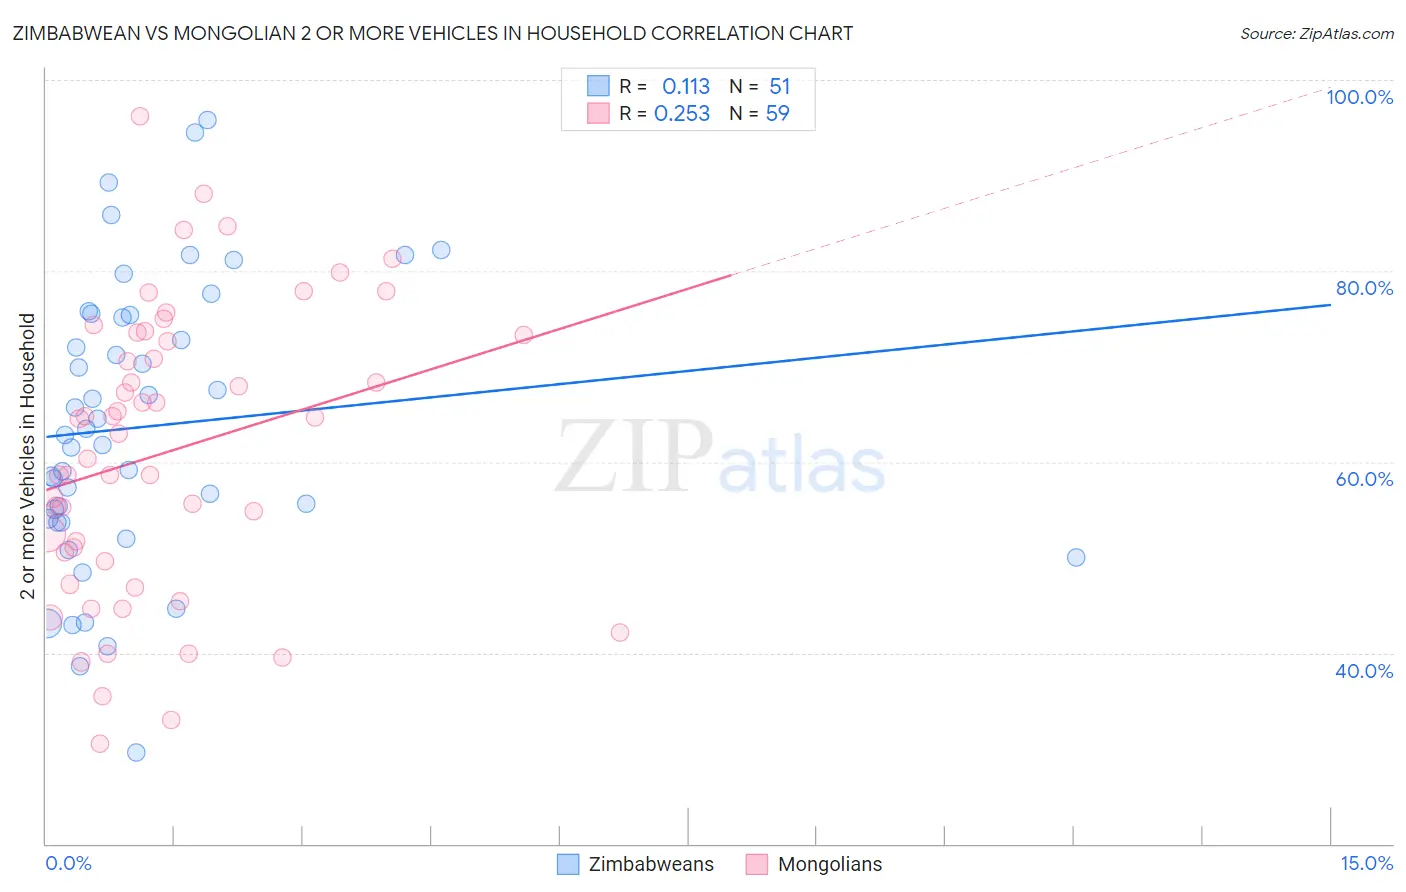 Zimbabwean vs Mongolian 2 or more Vehicles in Household